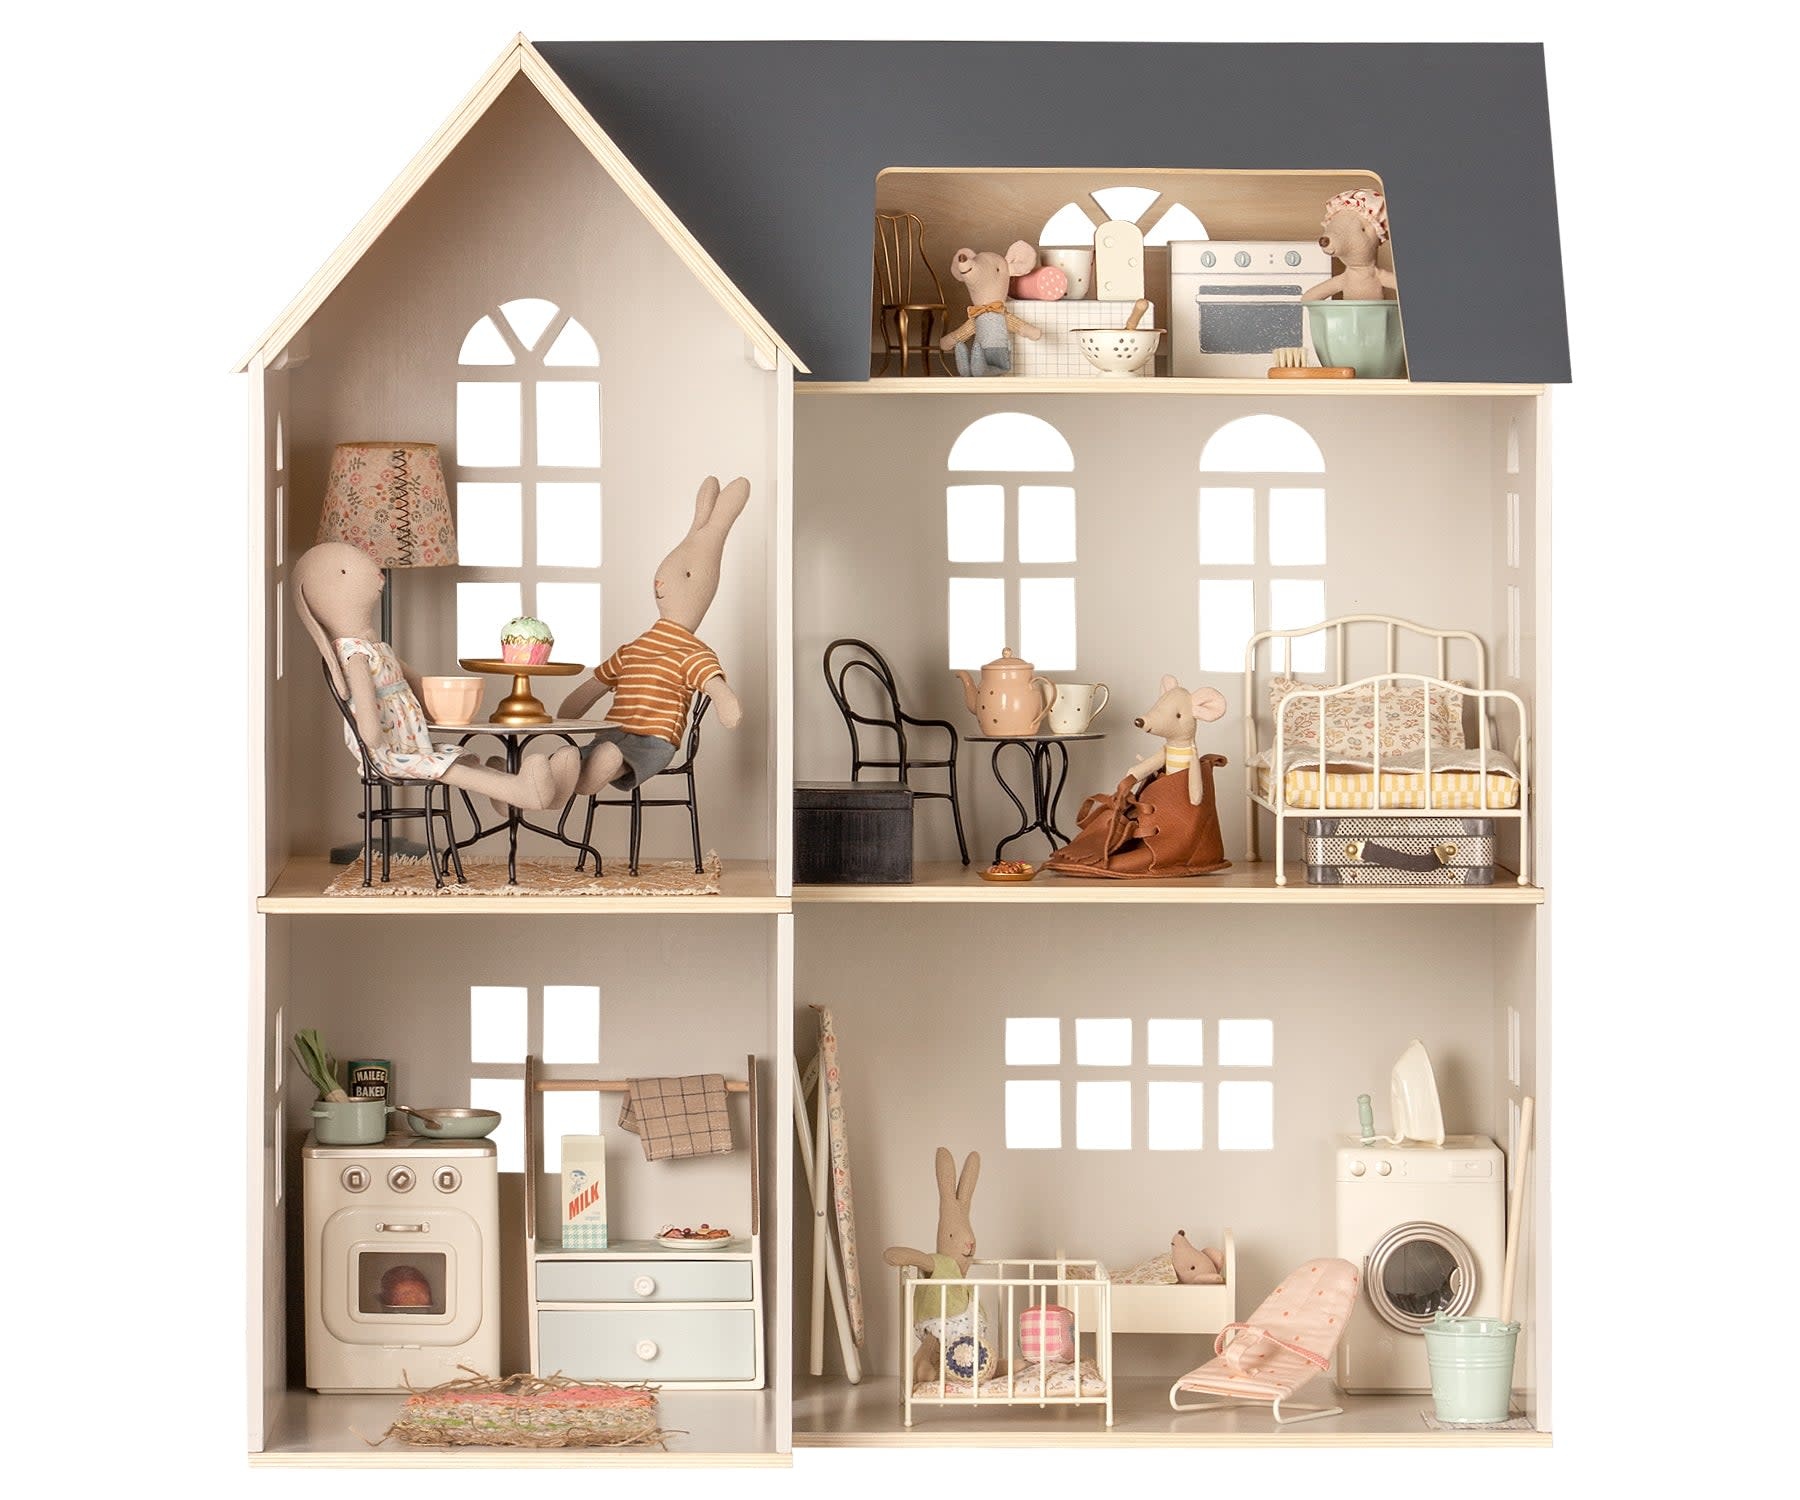 Maileg Dollhouse - G.Williker's Toy Shoppe Inc